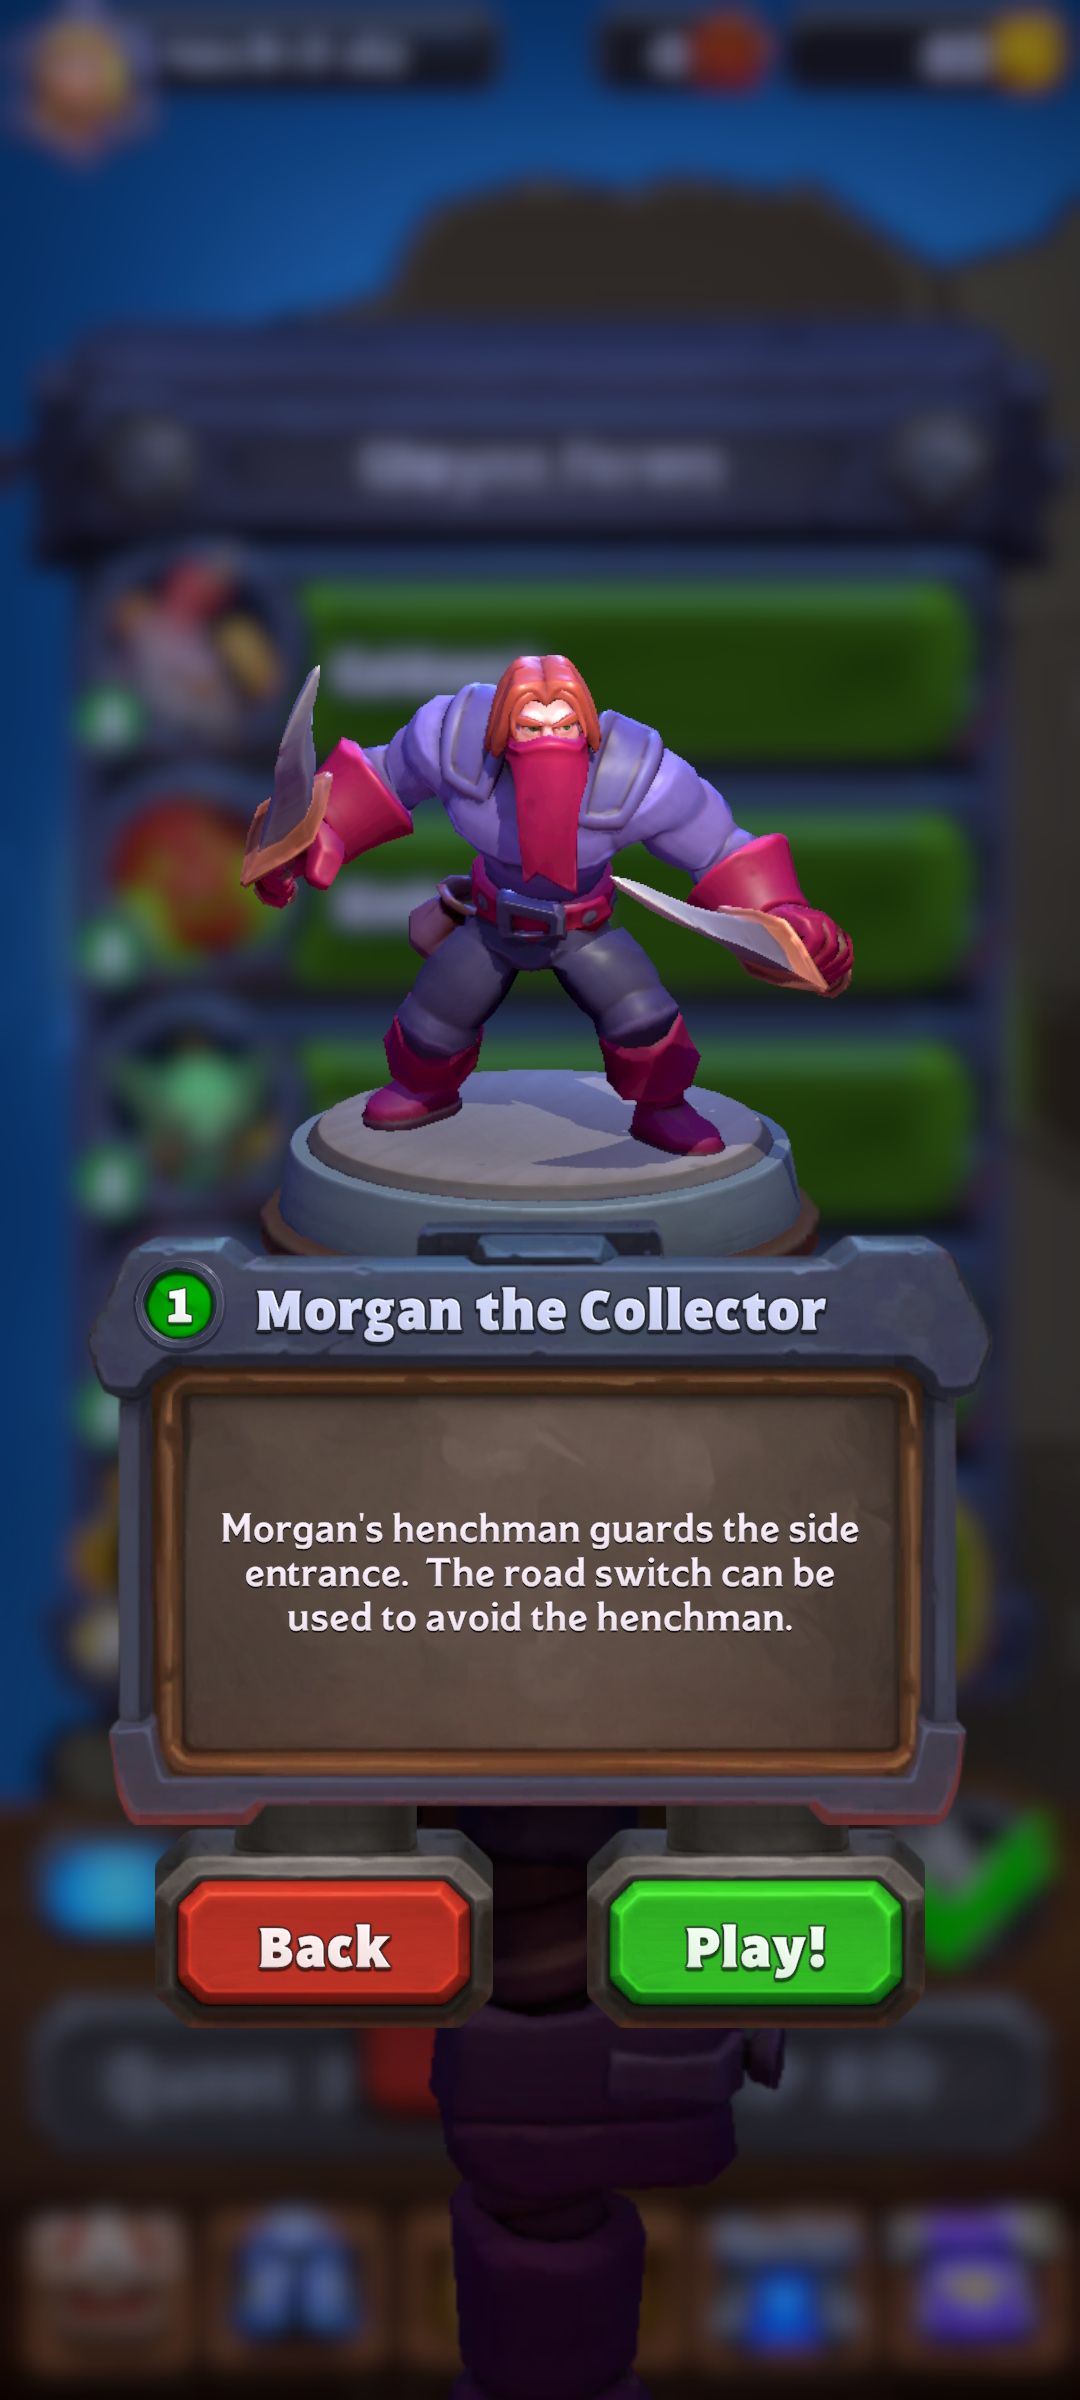 Morgan the Collector level hint